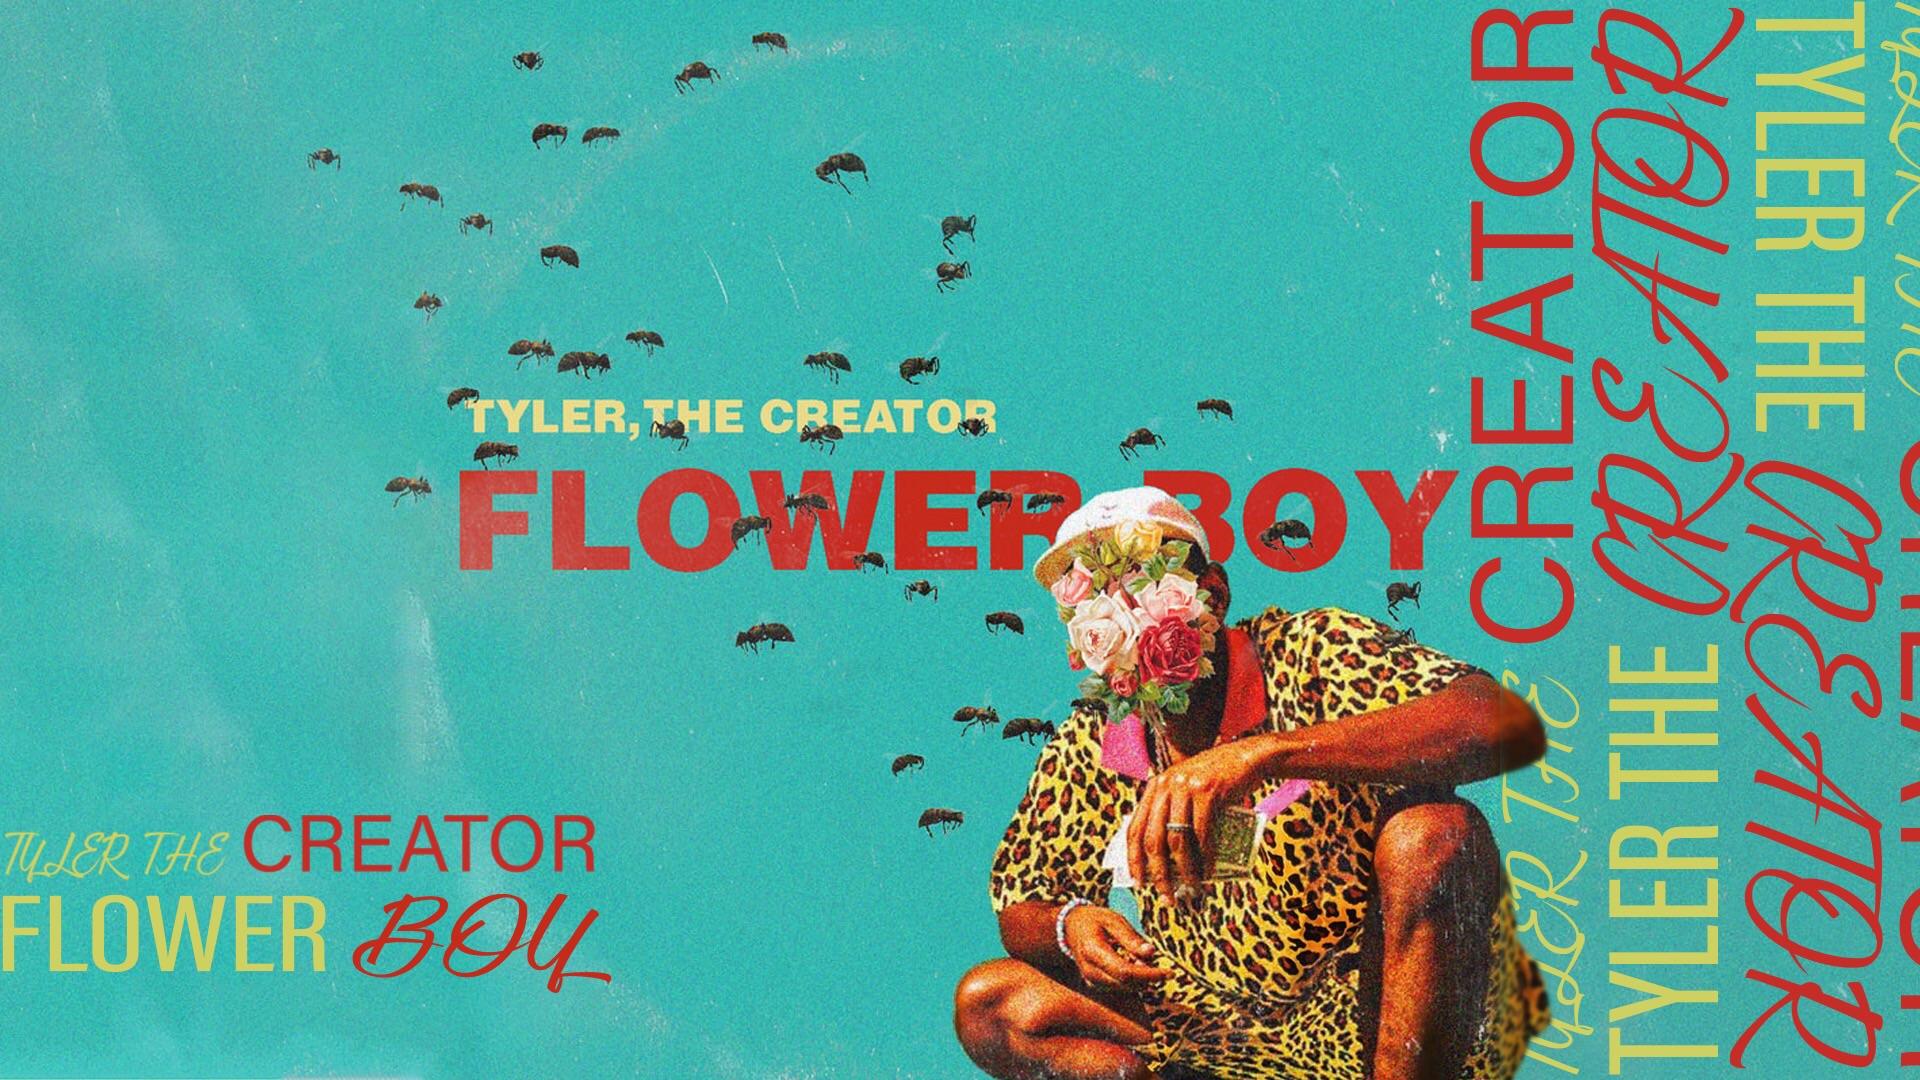 Every Tyler Album as a Wallpaper  rtylerthecreator